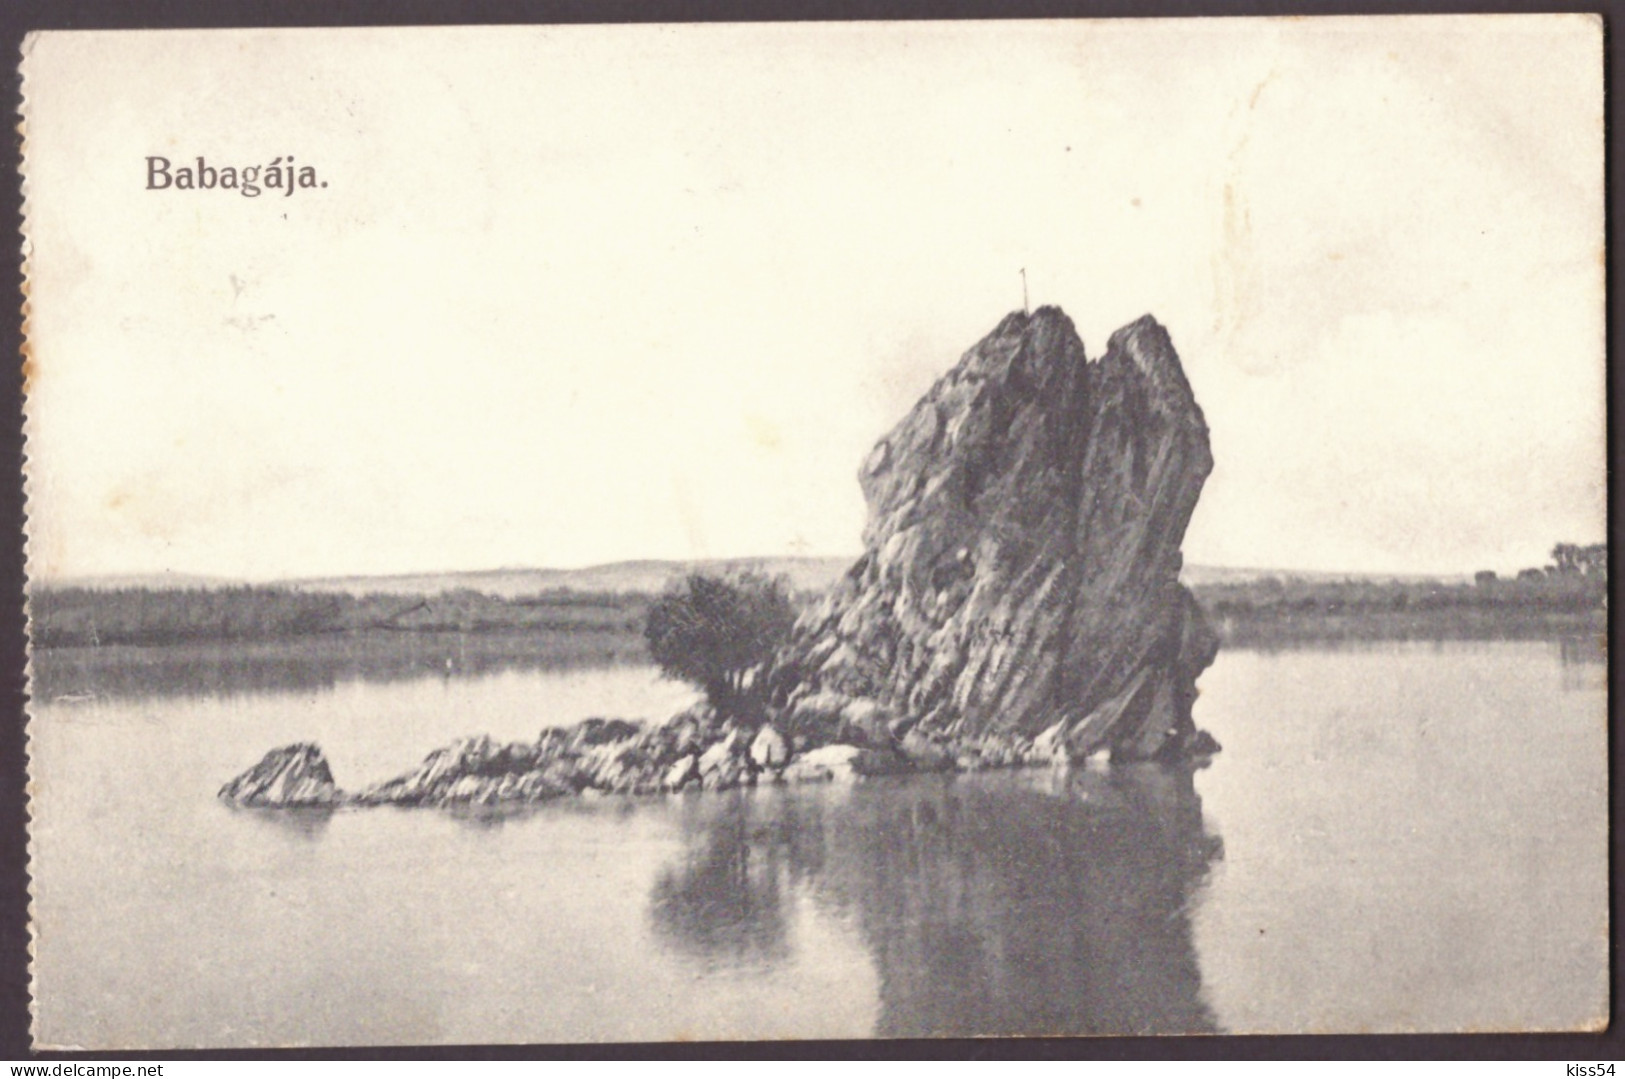 RO 77 - 24942 ORSOVA, Stanca Babagaja, Romania - Old Postcard - Used - 1913 - Rumania